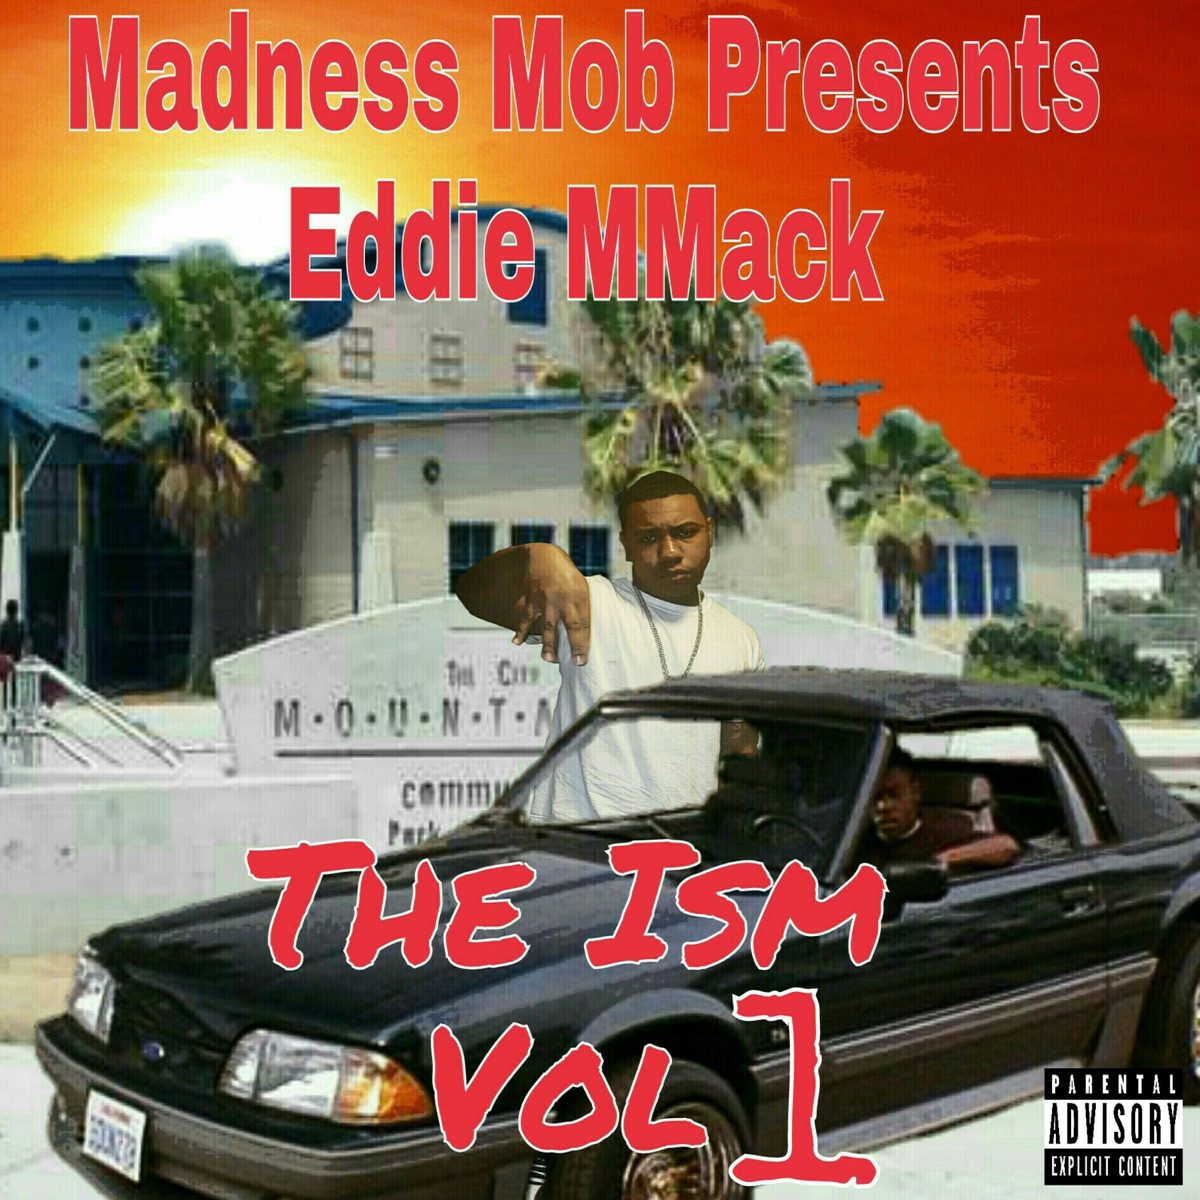 Eddie MMack - The Ism, Vol. 1